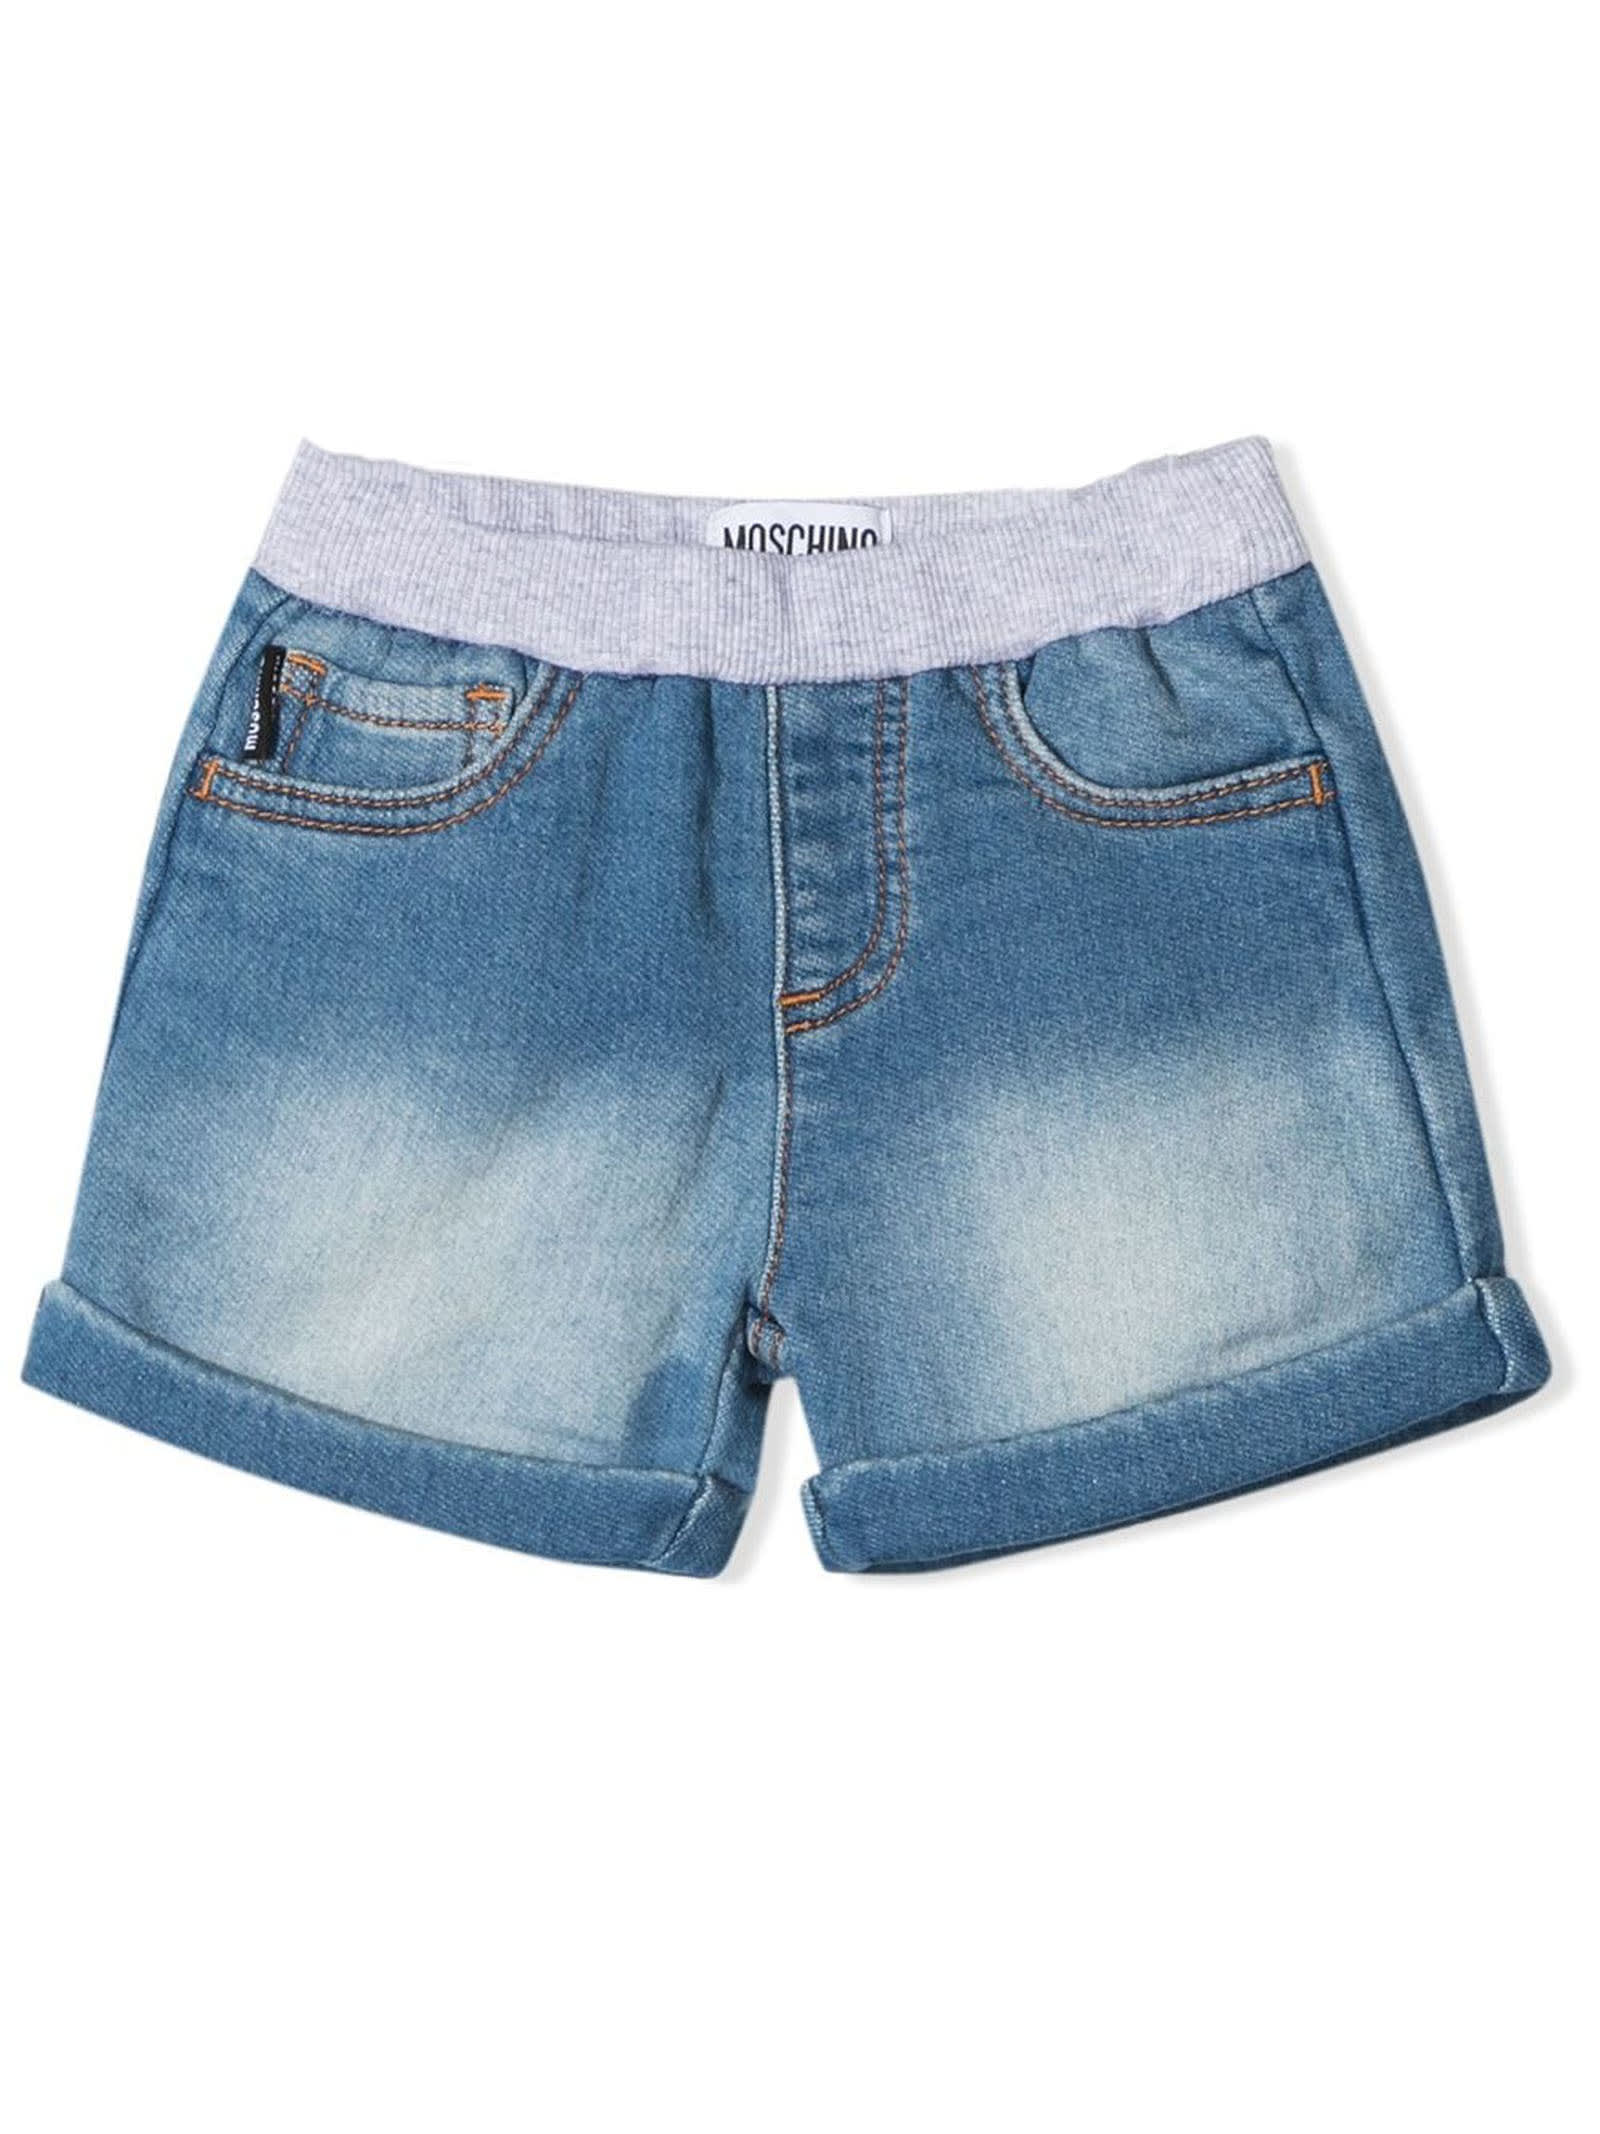 Moschino Denim-blue Cotton Shorts